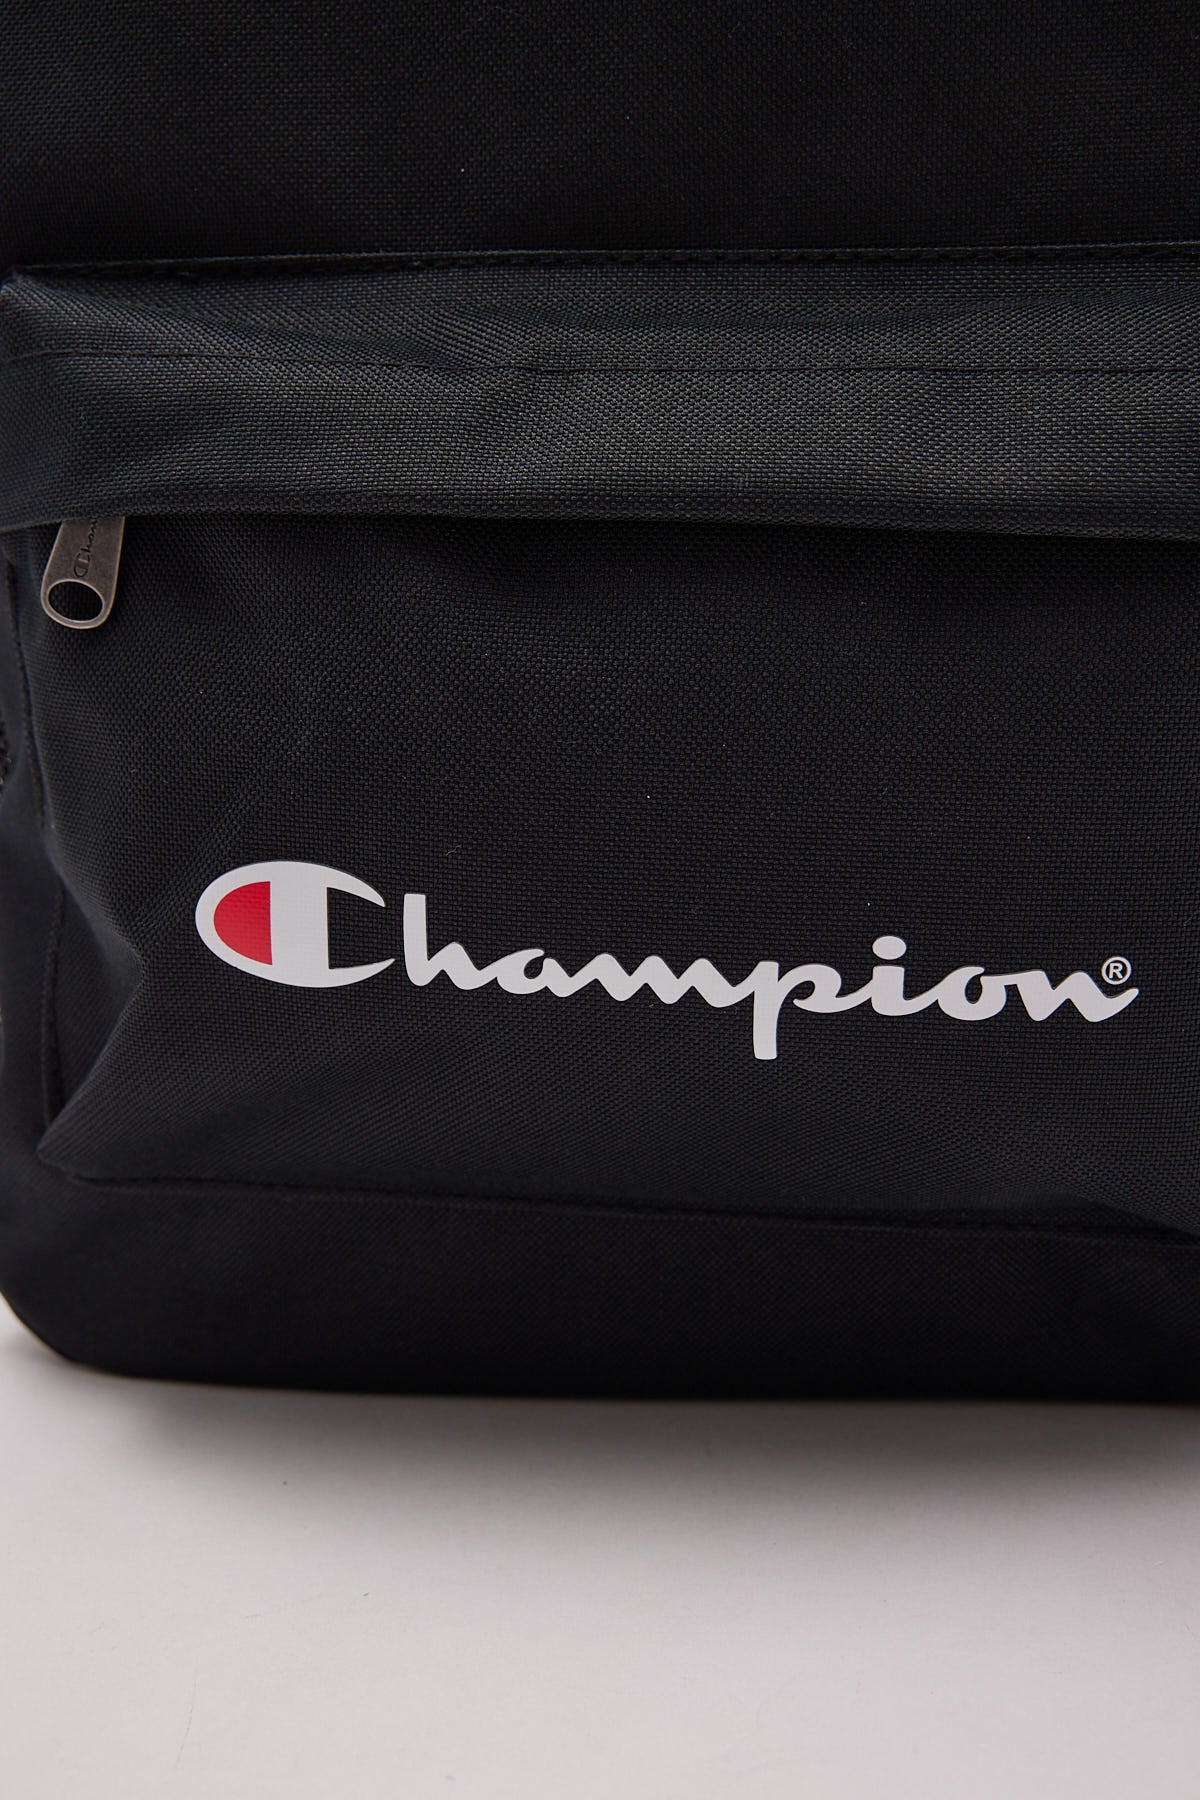 Champion Medium Backpack Black